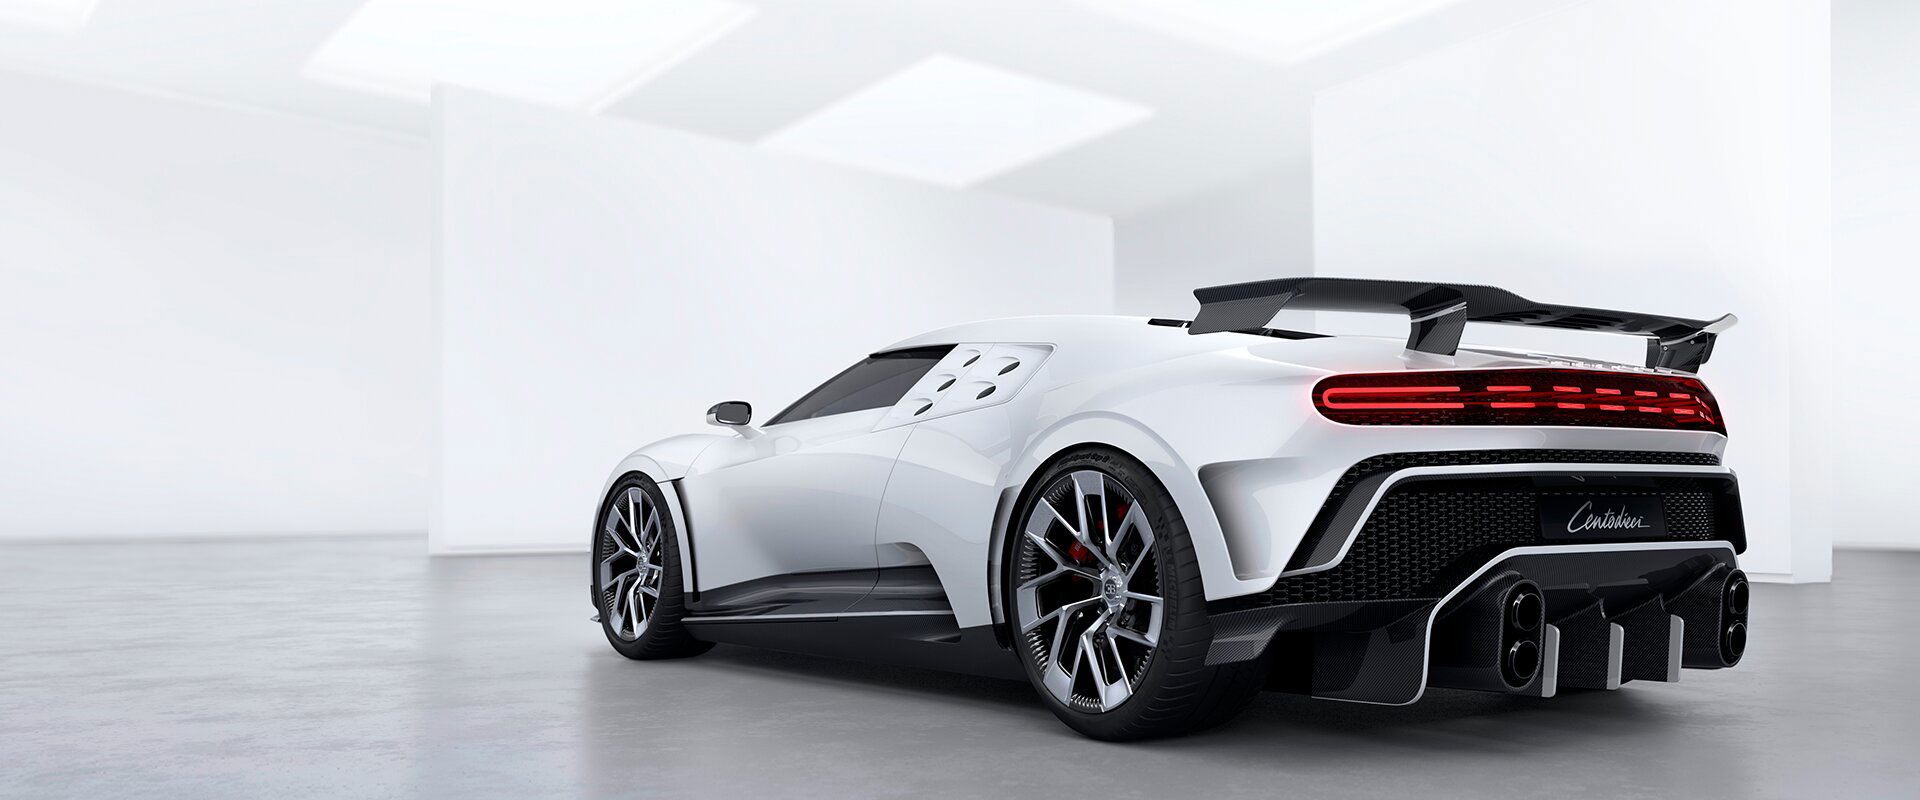 Most expensive luxury cars in the world - Bugatti Centodieci.